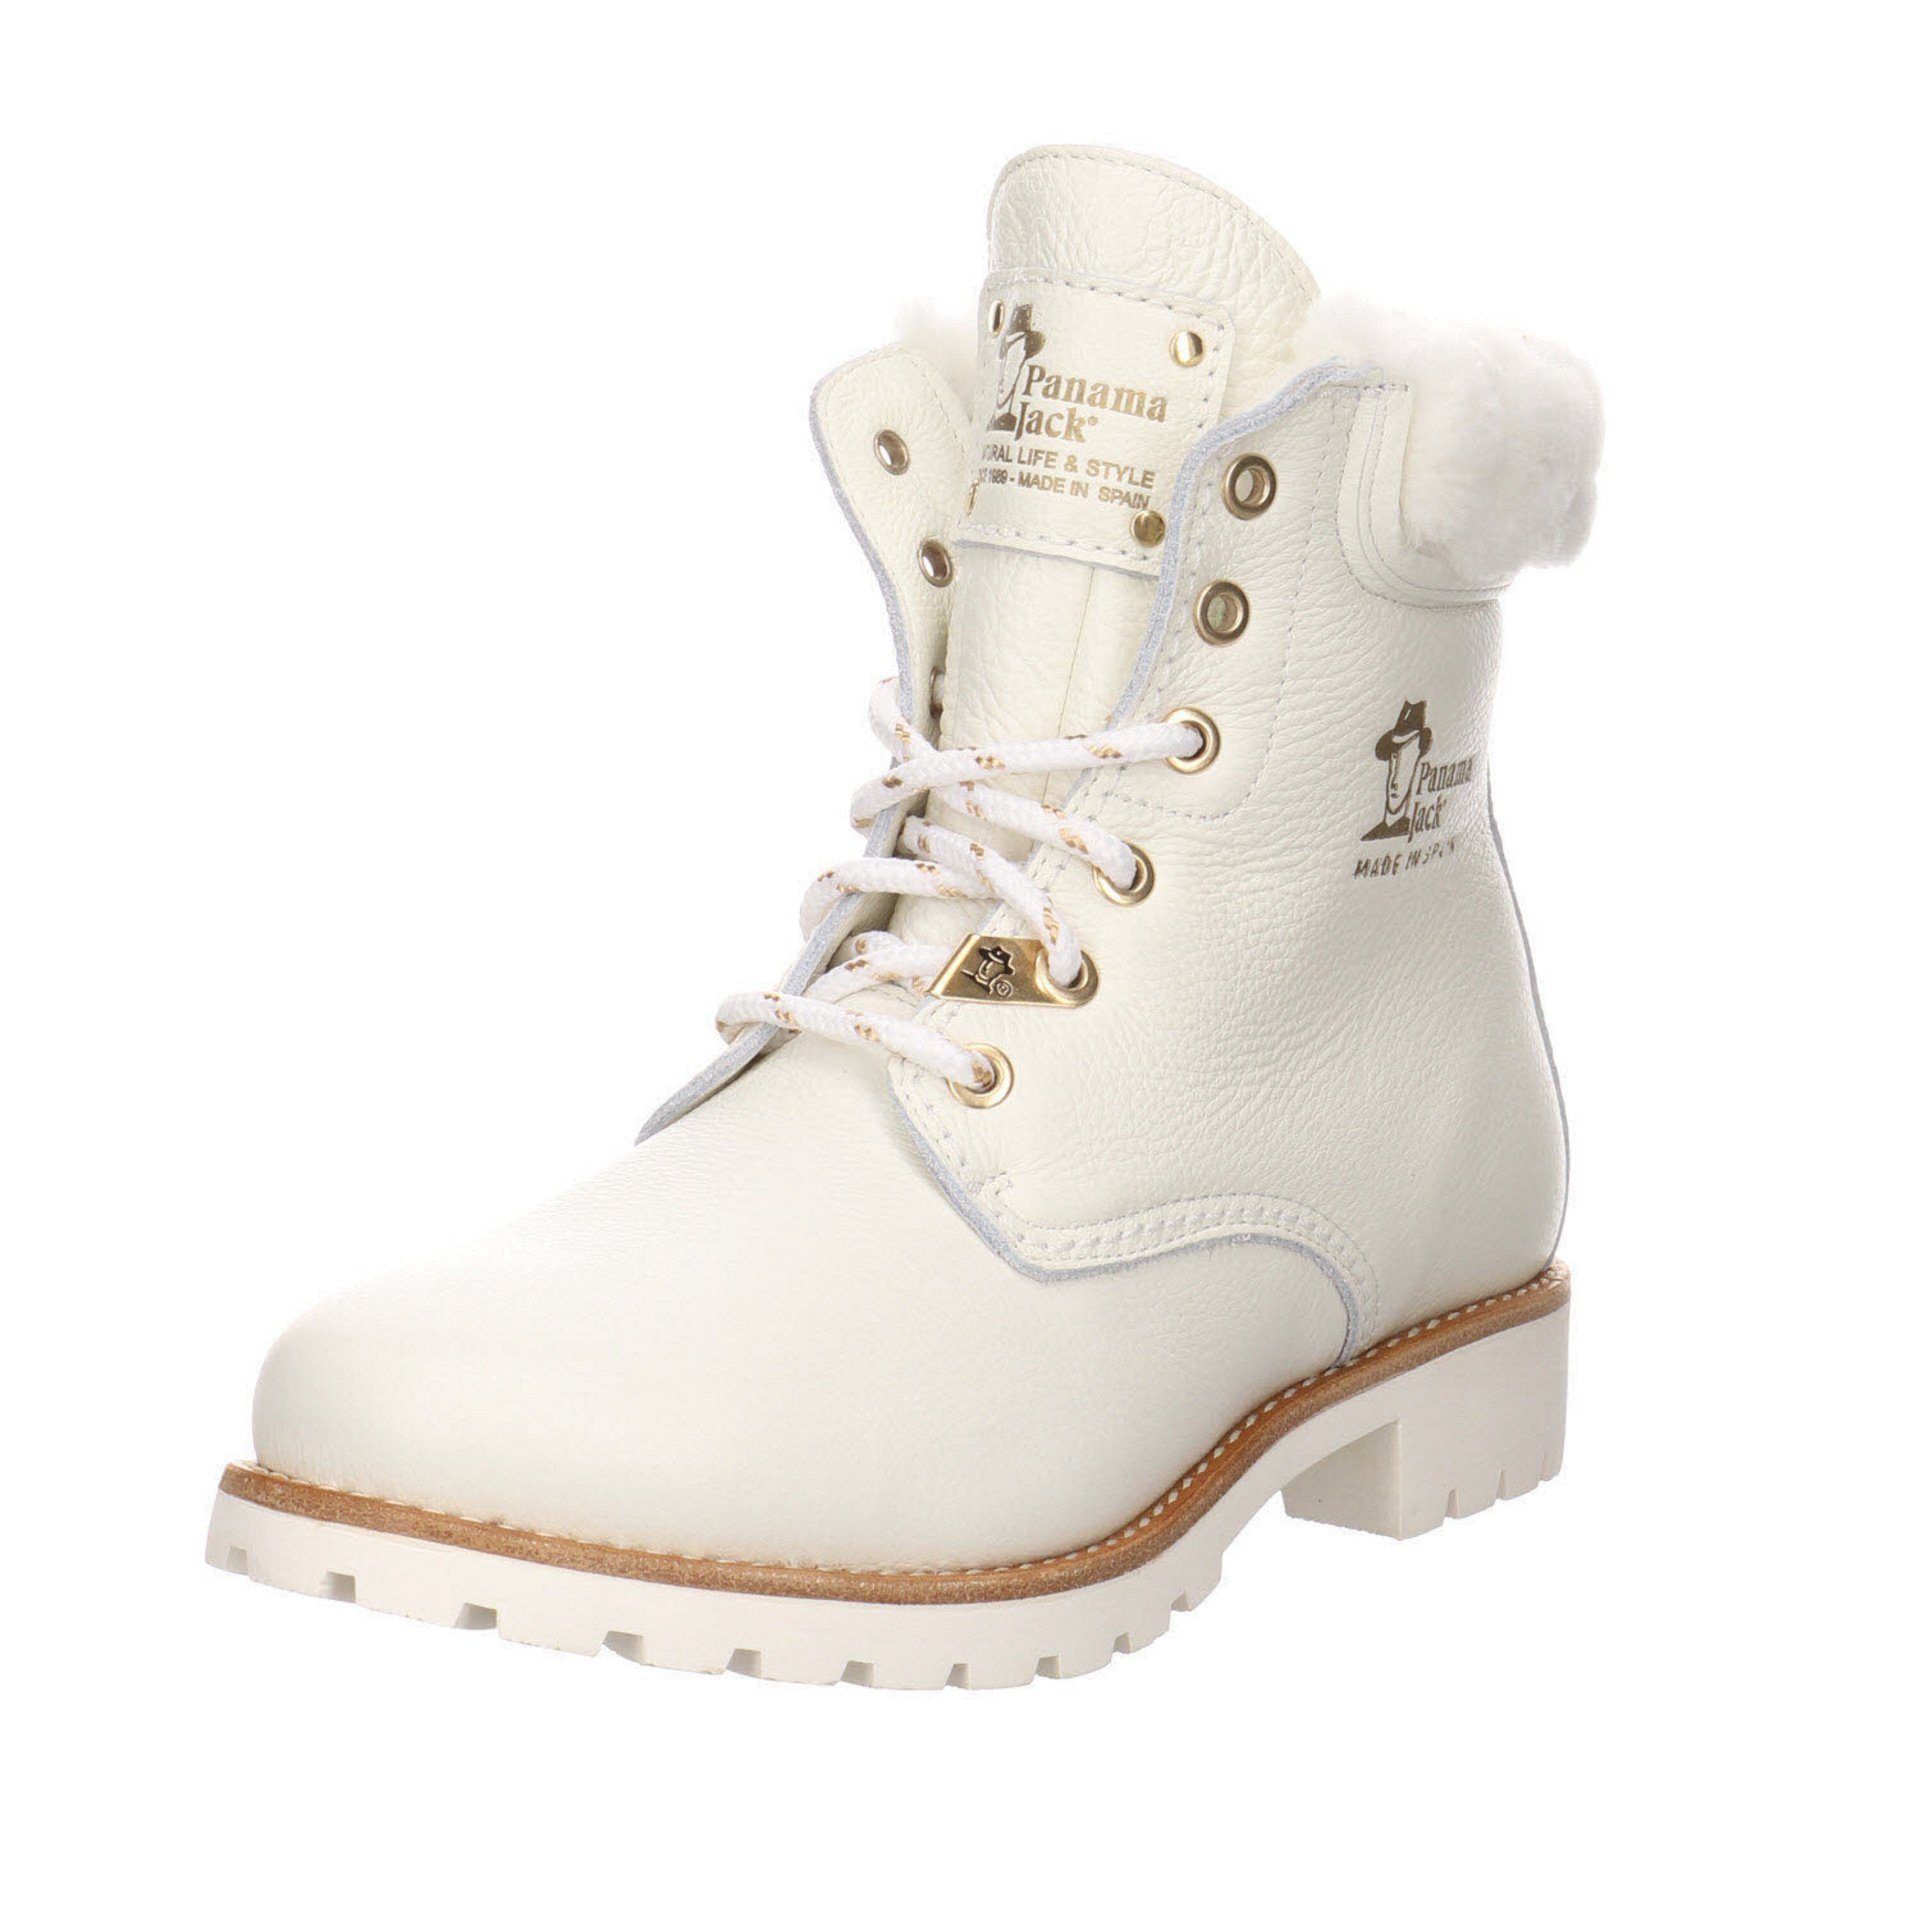 Panama Jack Damen Stiefel Schuhe Igloo Trav Boots Stiefel Glattleder bianco/white